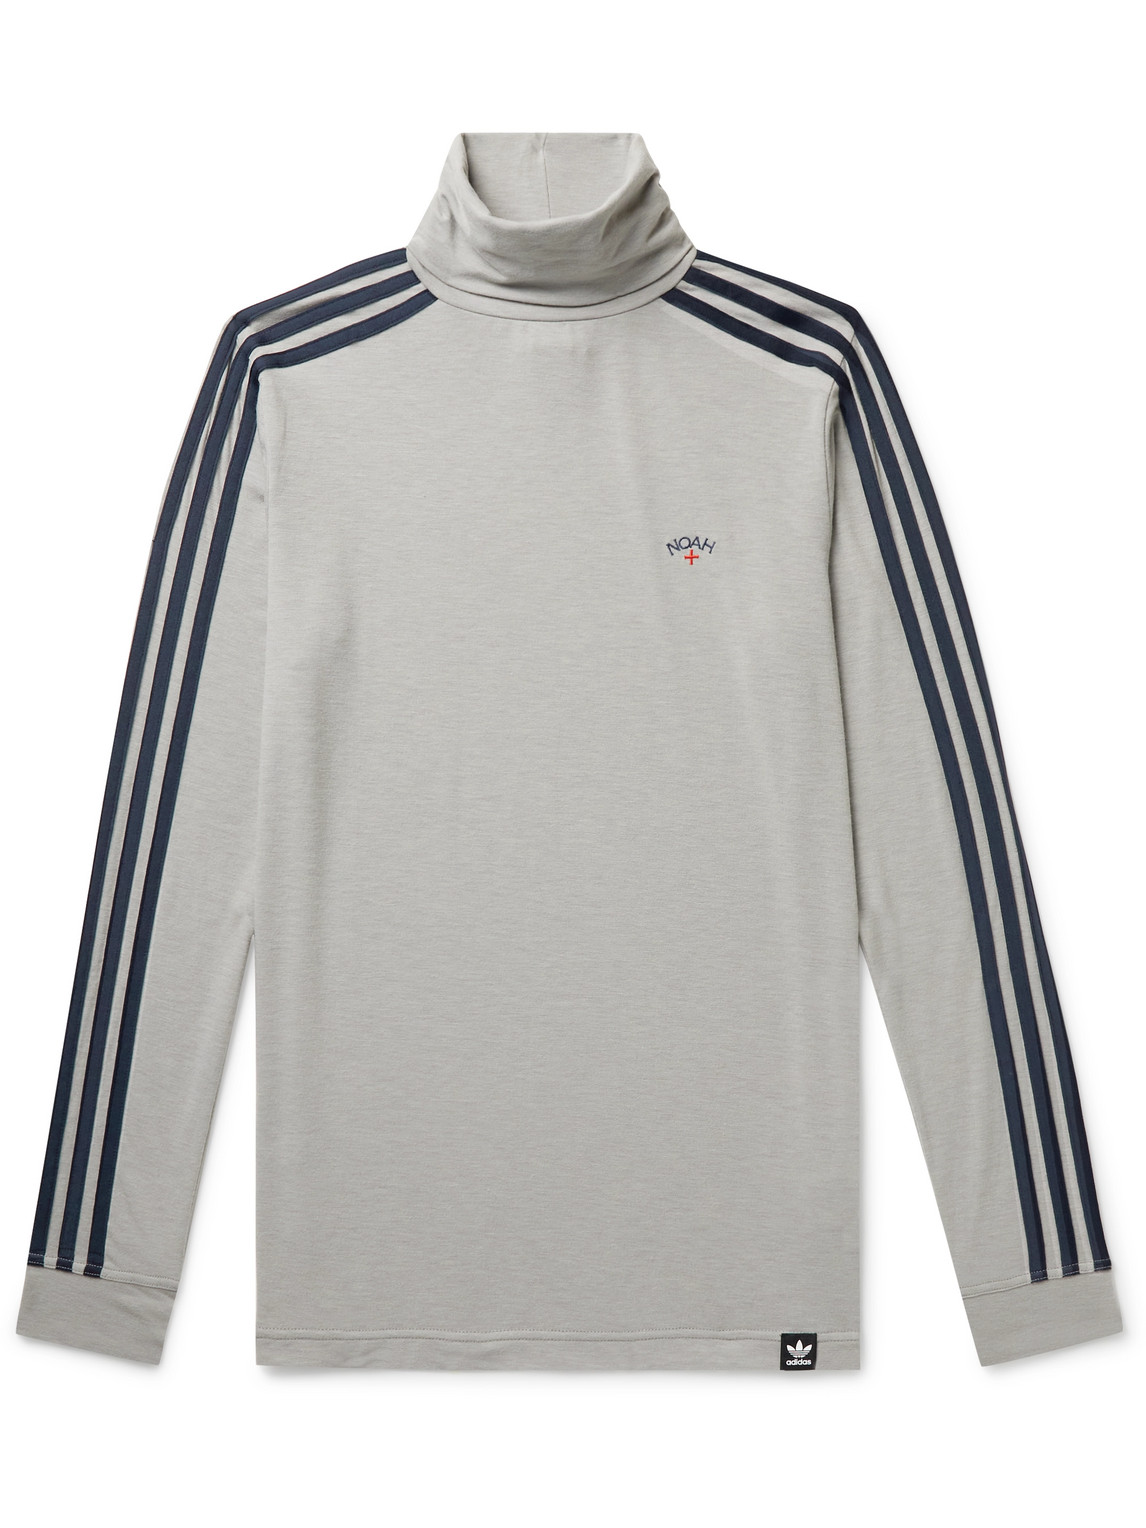 Adidas Consortium Noah Striped Embroidered Jersey Rollneck Sweatshirt In Gray